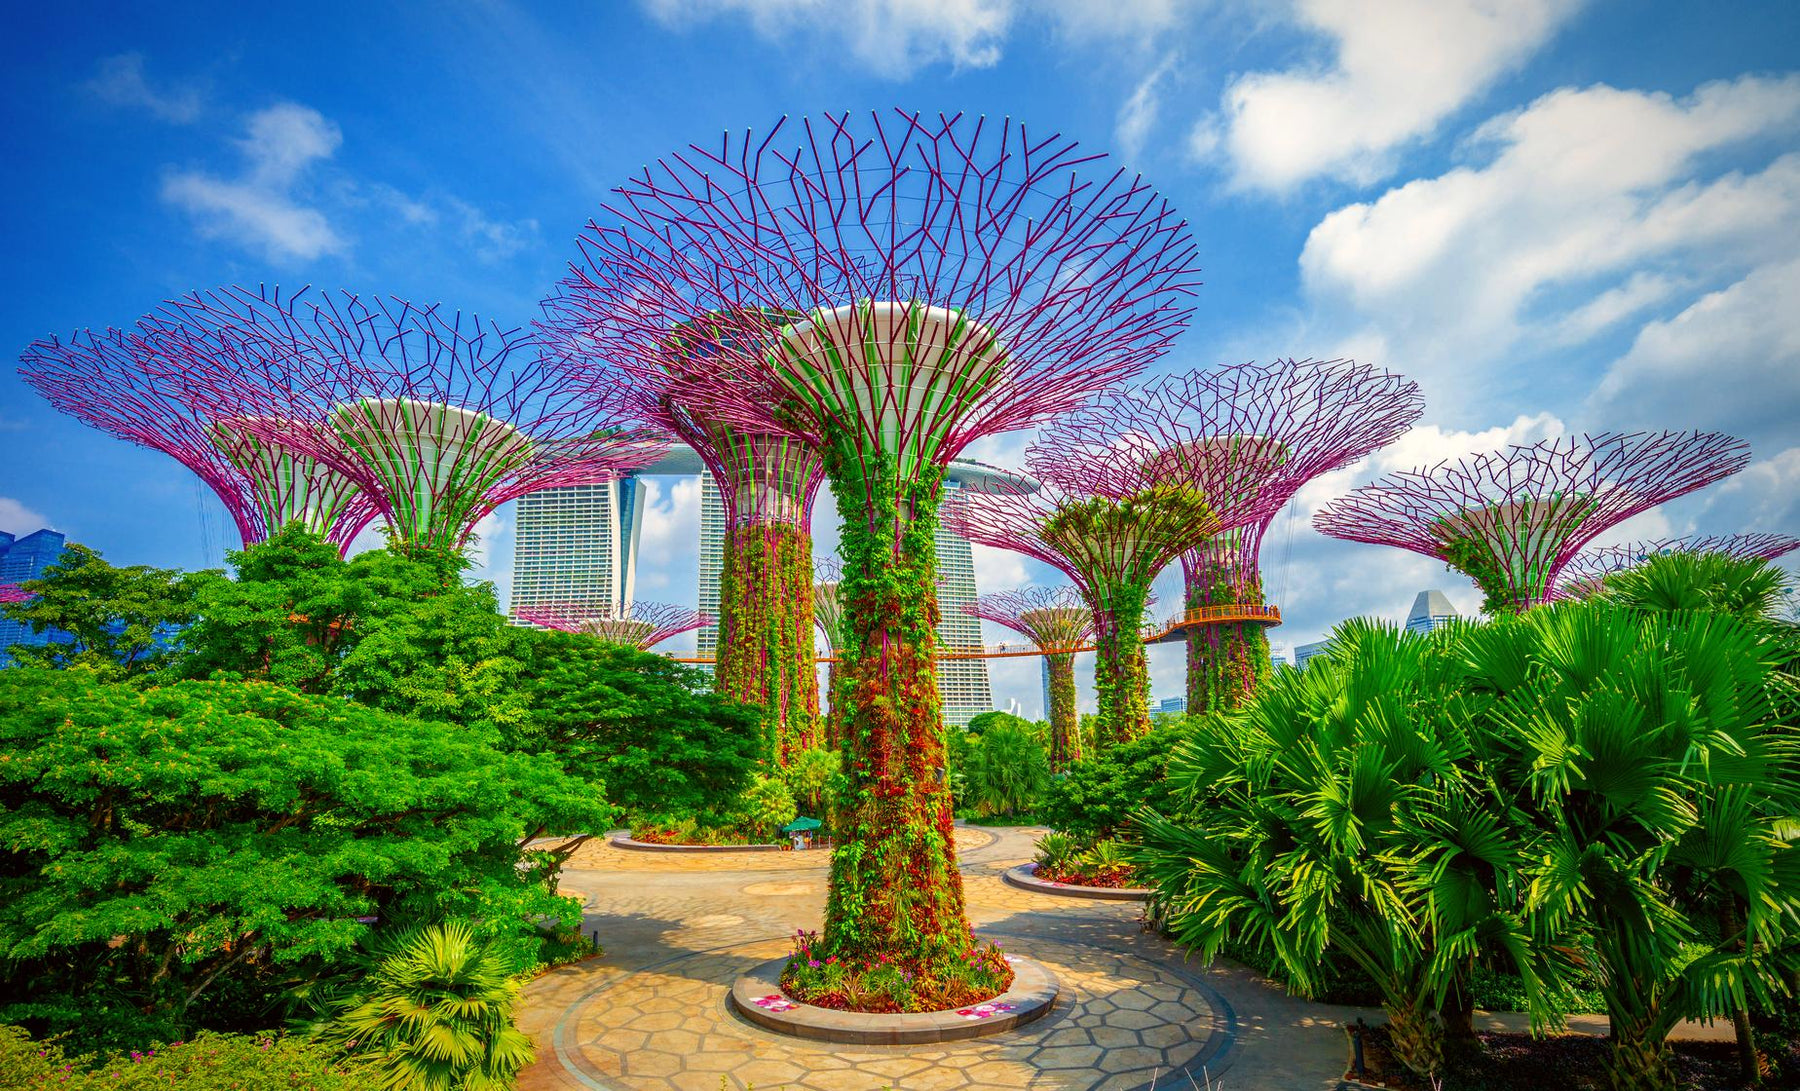 Gardens Of The World: Singapore